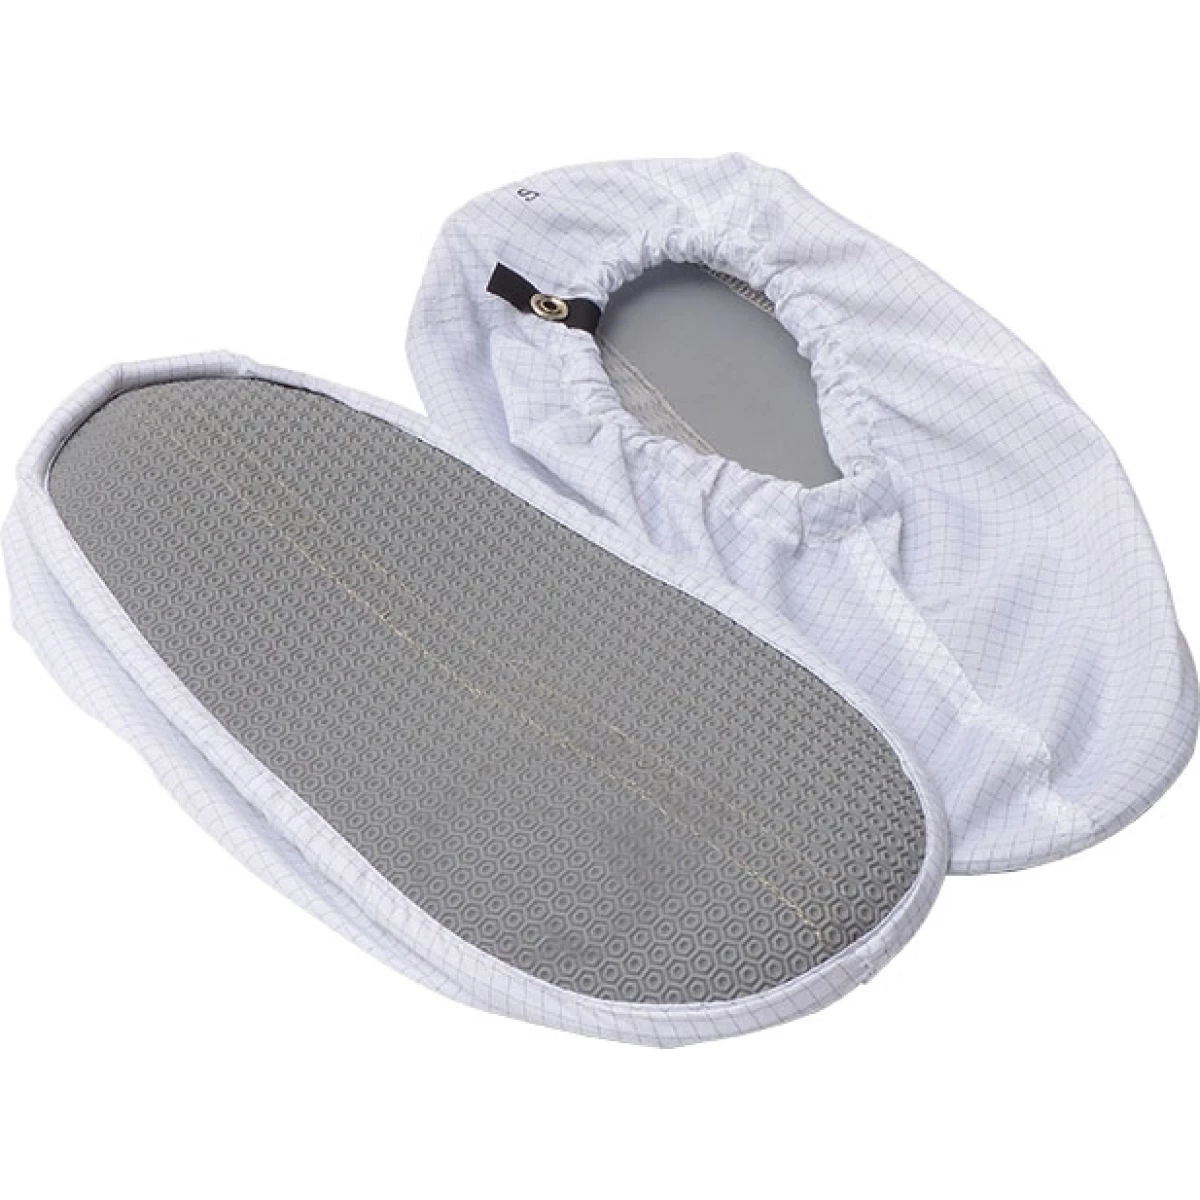 ESD reusable overshoe with anti-slip profile